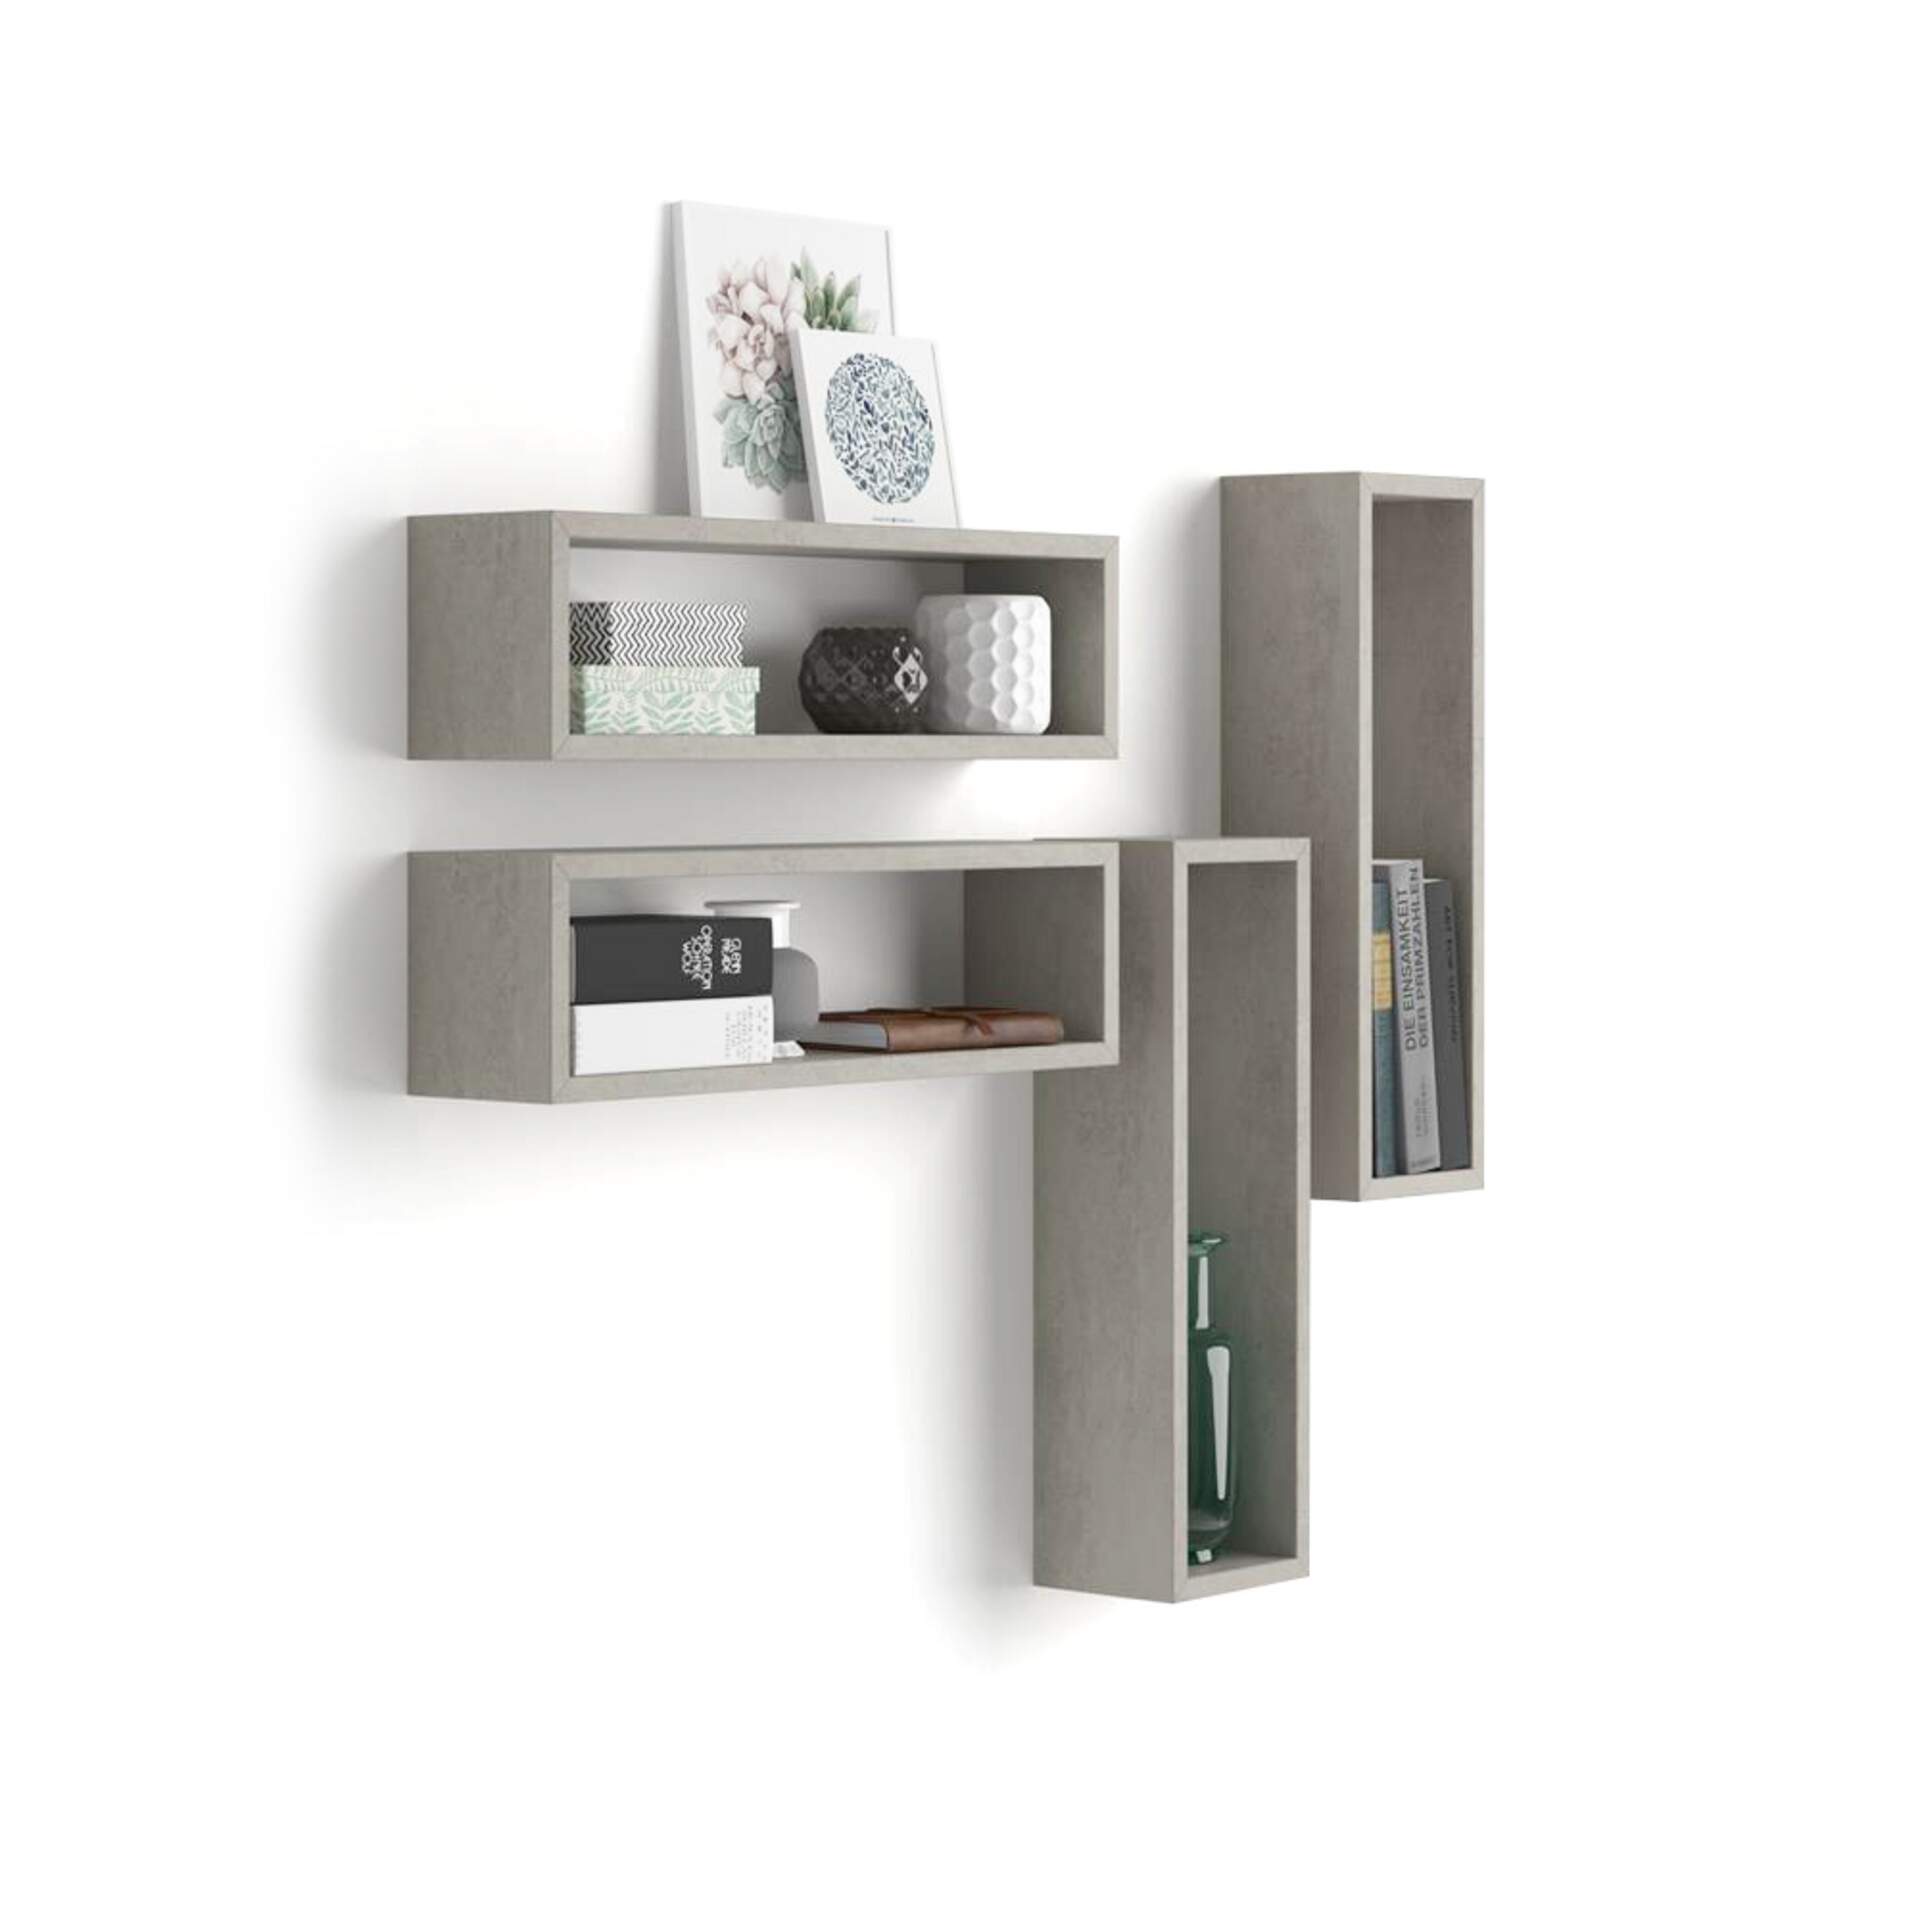 Mobili Fiver Set de 4 estantes en forma de cubo Iacopo, color Cemento gris